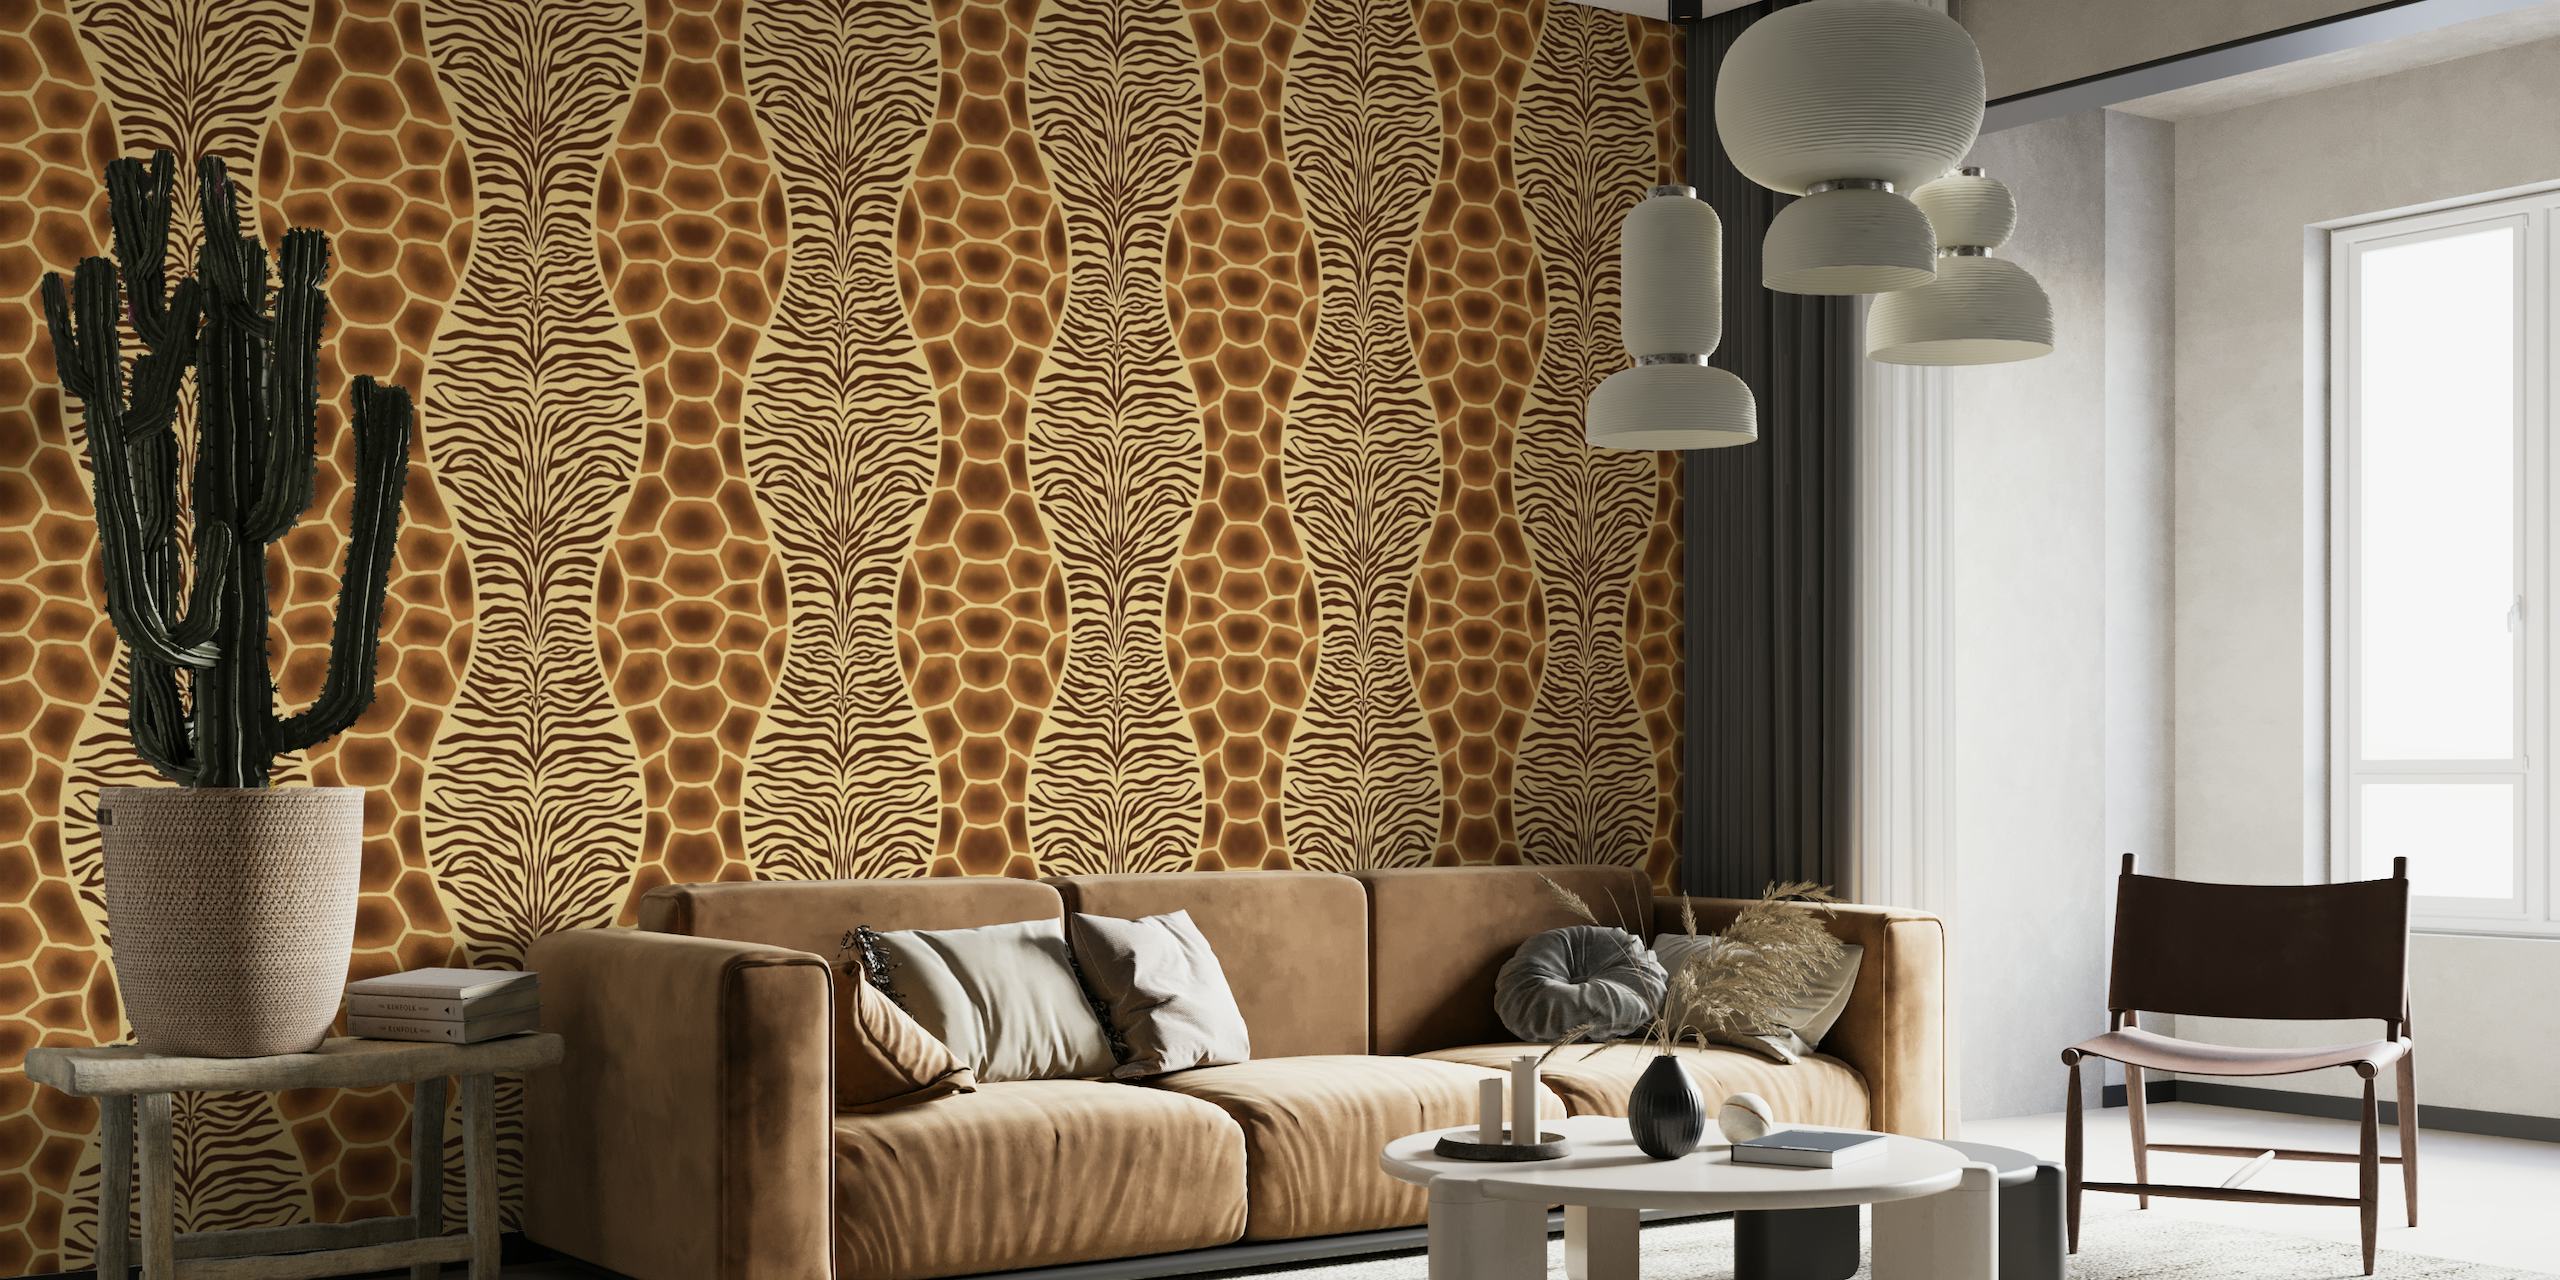 Natural Zebra - giraffe animal print behang